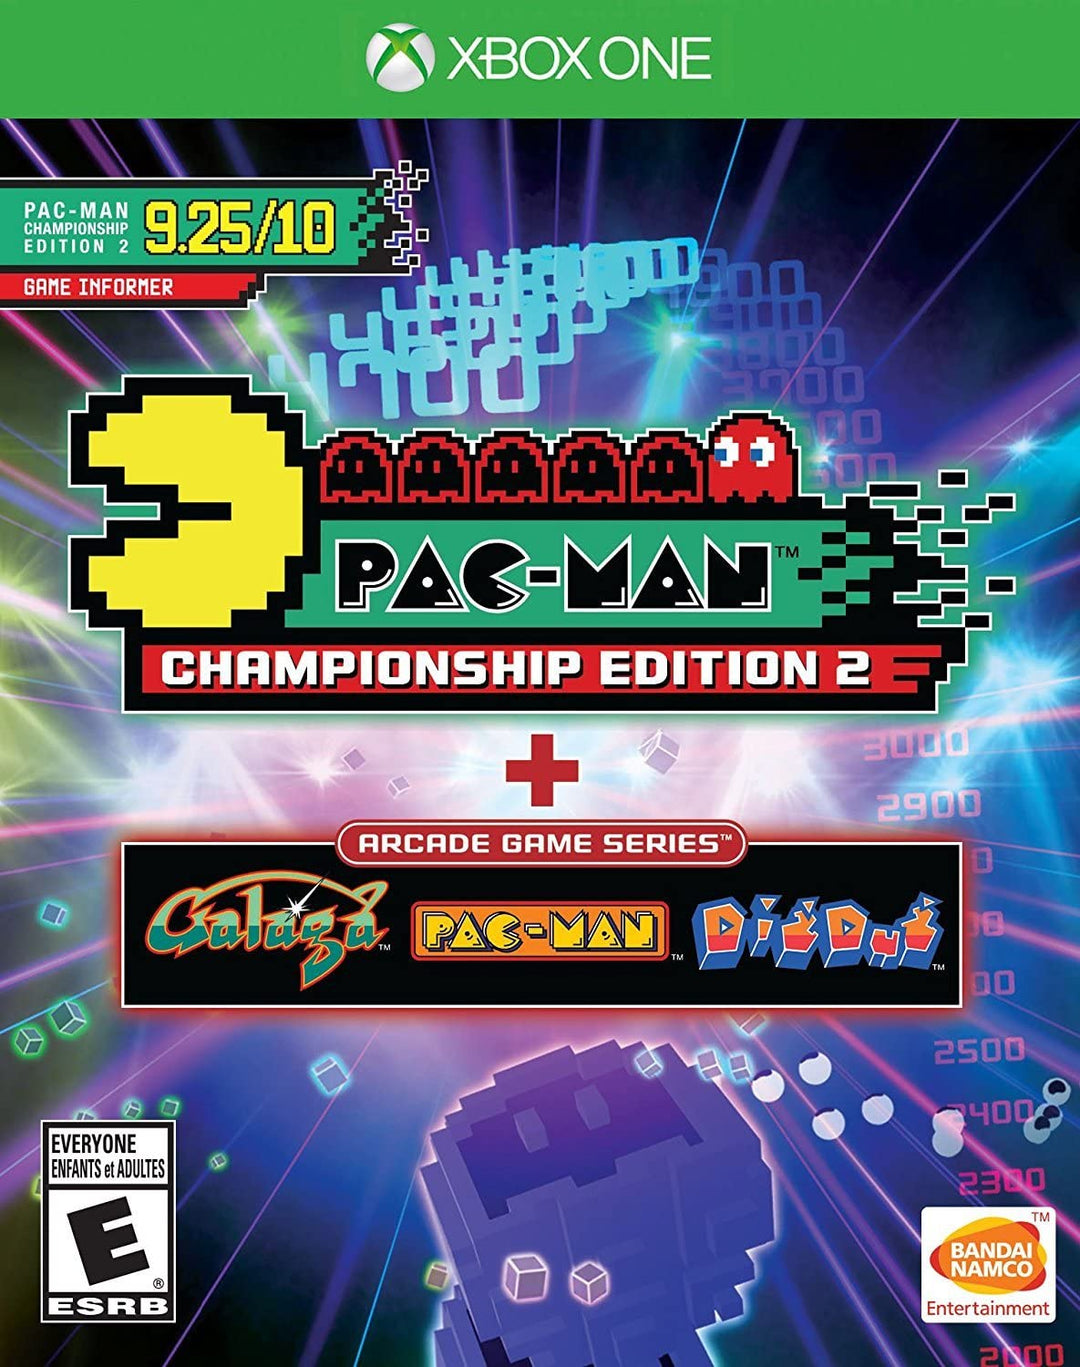 Pac-Man Championship Ed 2 + Arcade Game Series